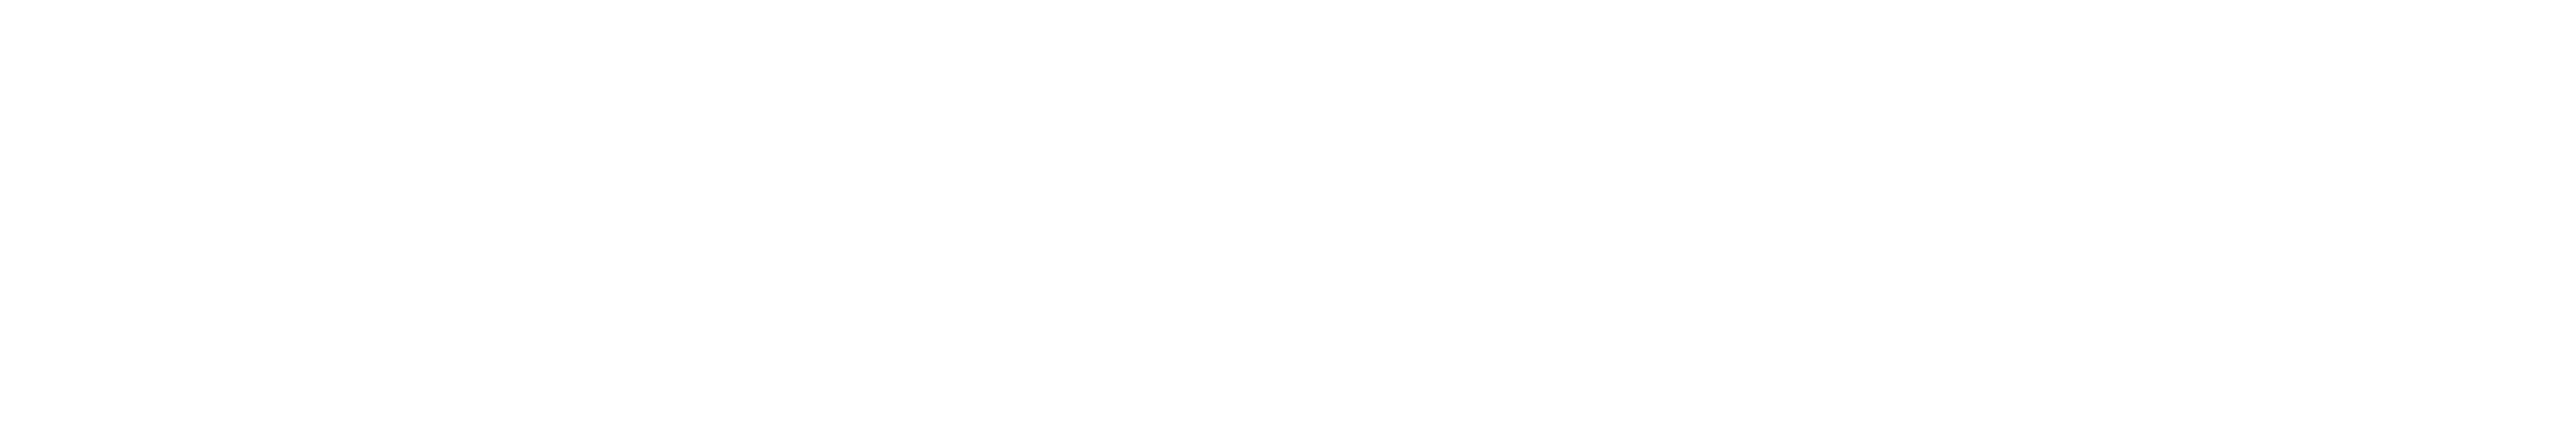 Geared-Up-Culcha